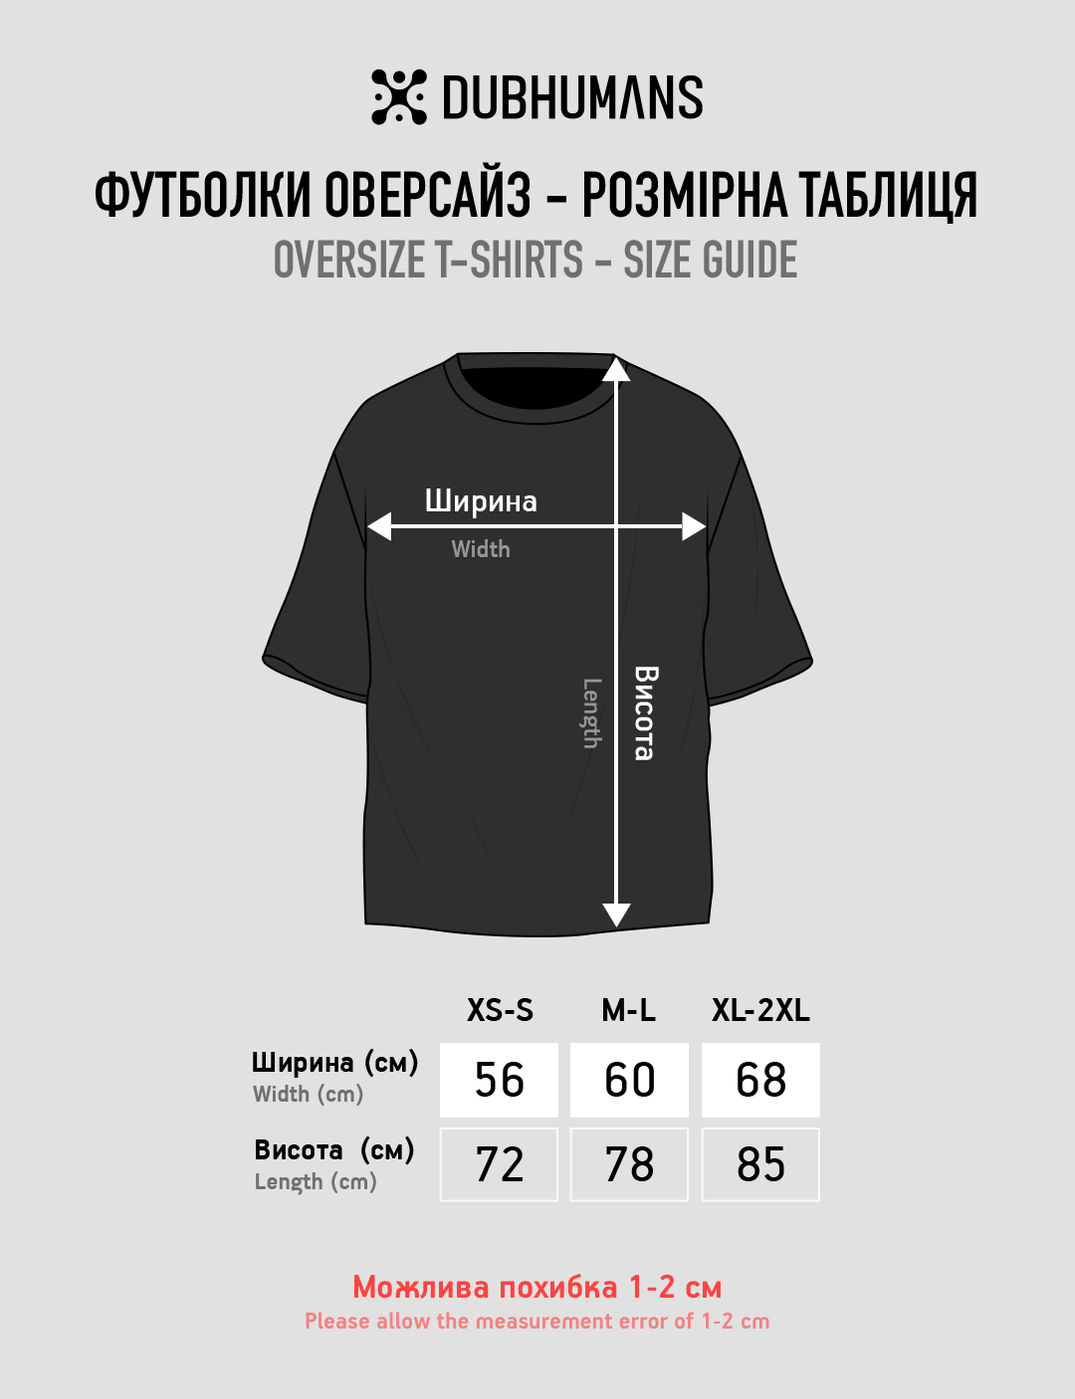 Men's T-shirt Oversize “Pulse of My Heart”, Black, XS-S